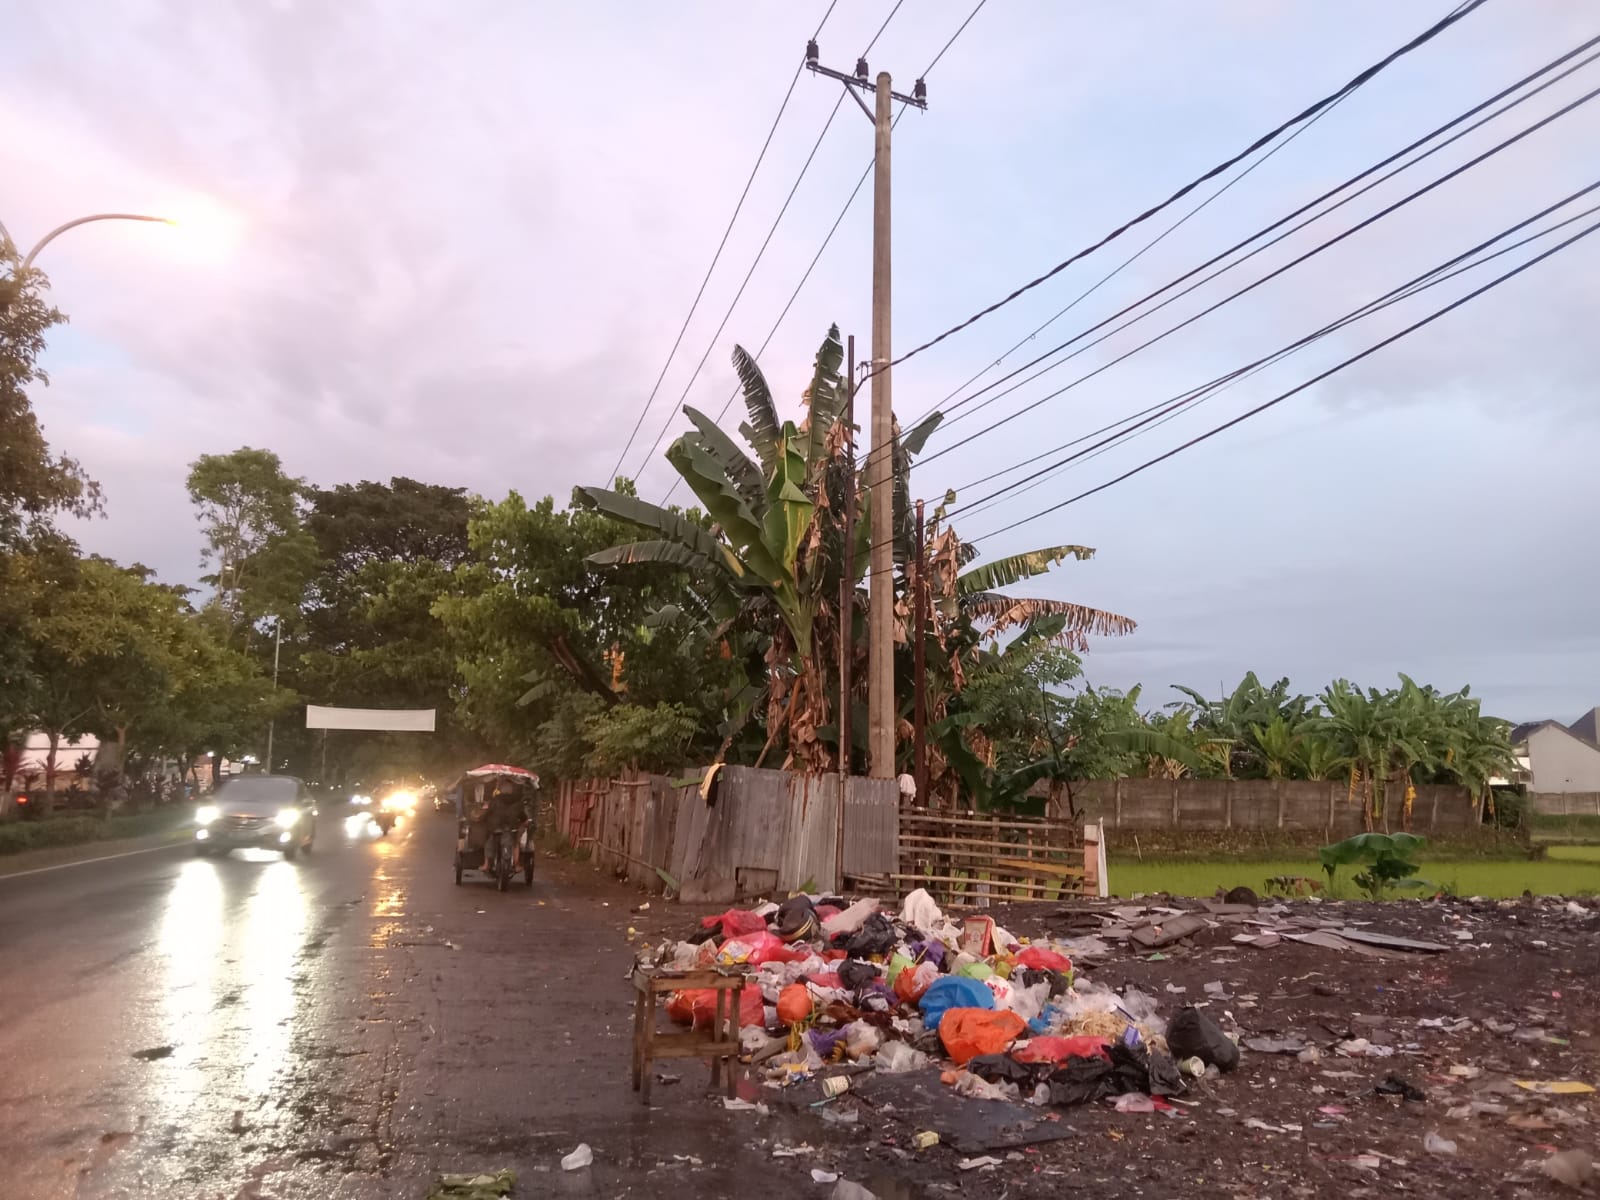 Sampah Menumpuk Dan Berceceran dipinggir Jalan Mengganggu Pengguna Jalan